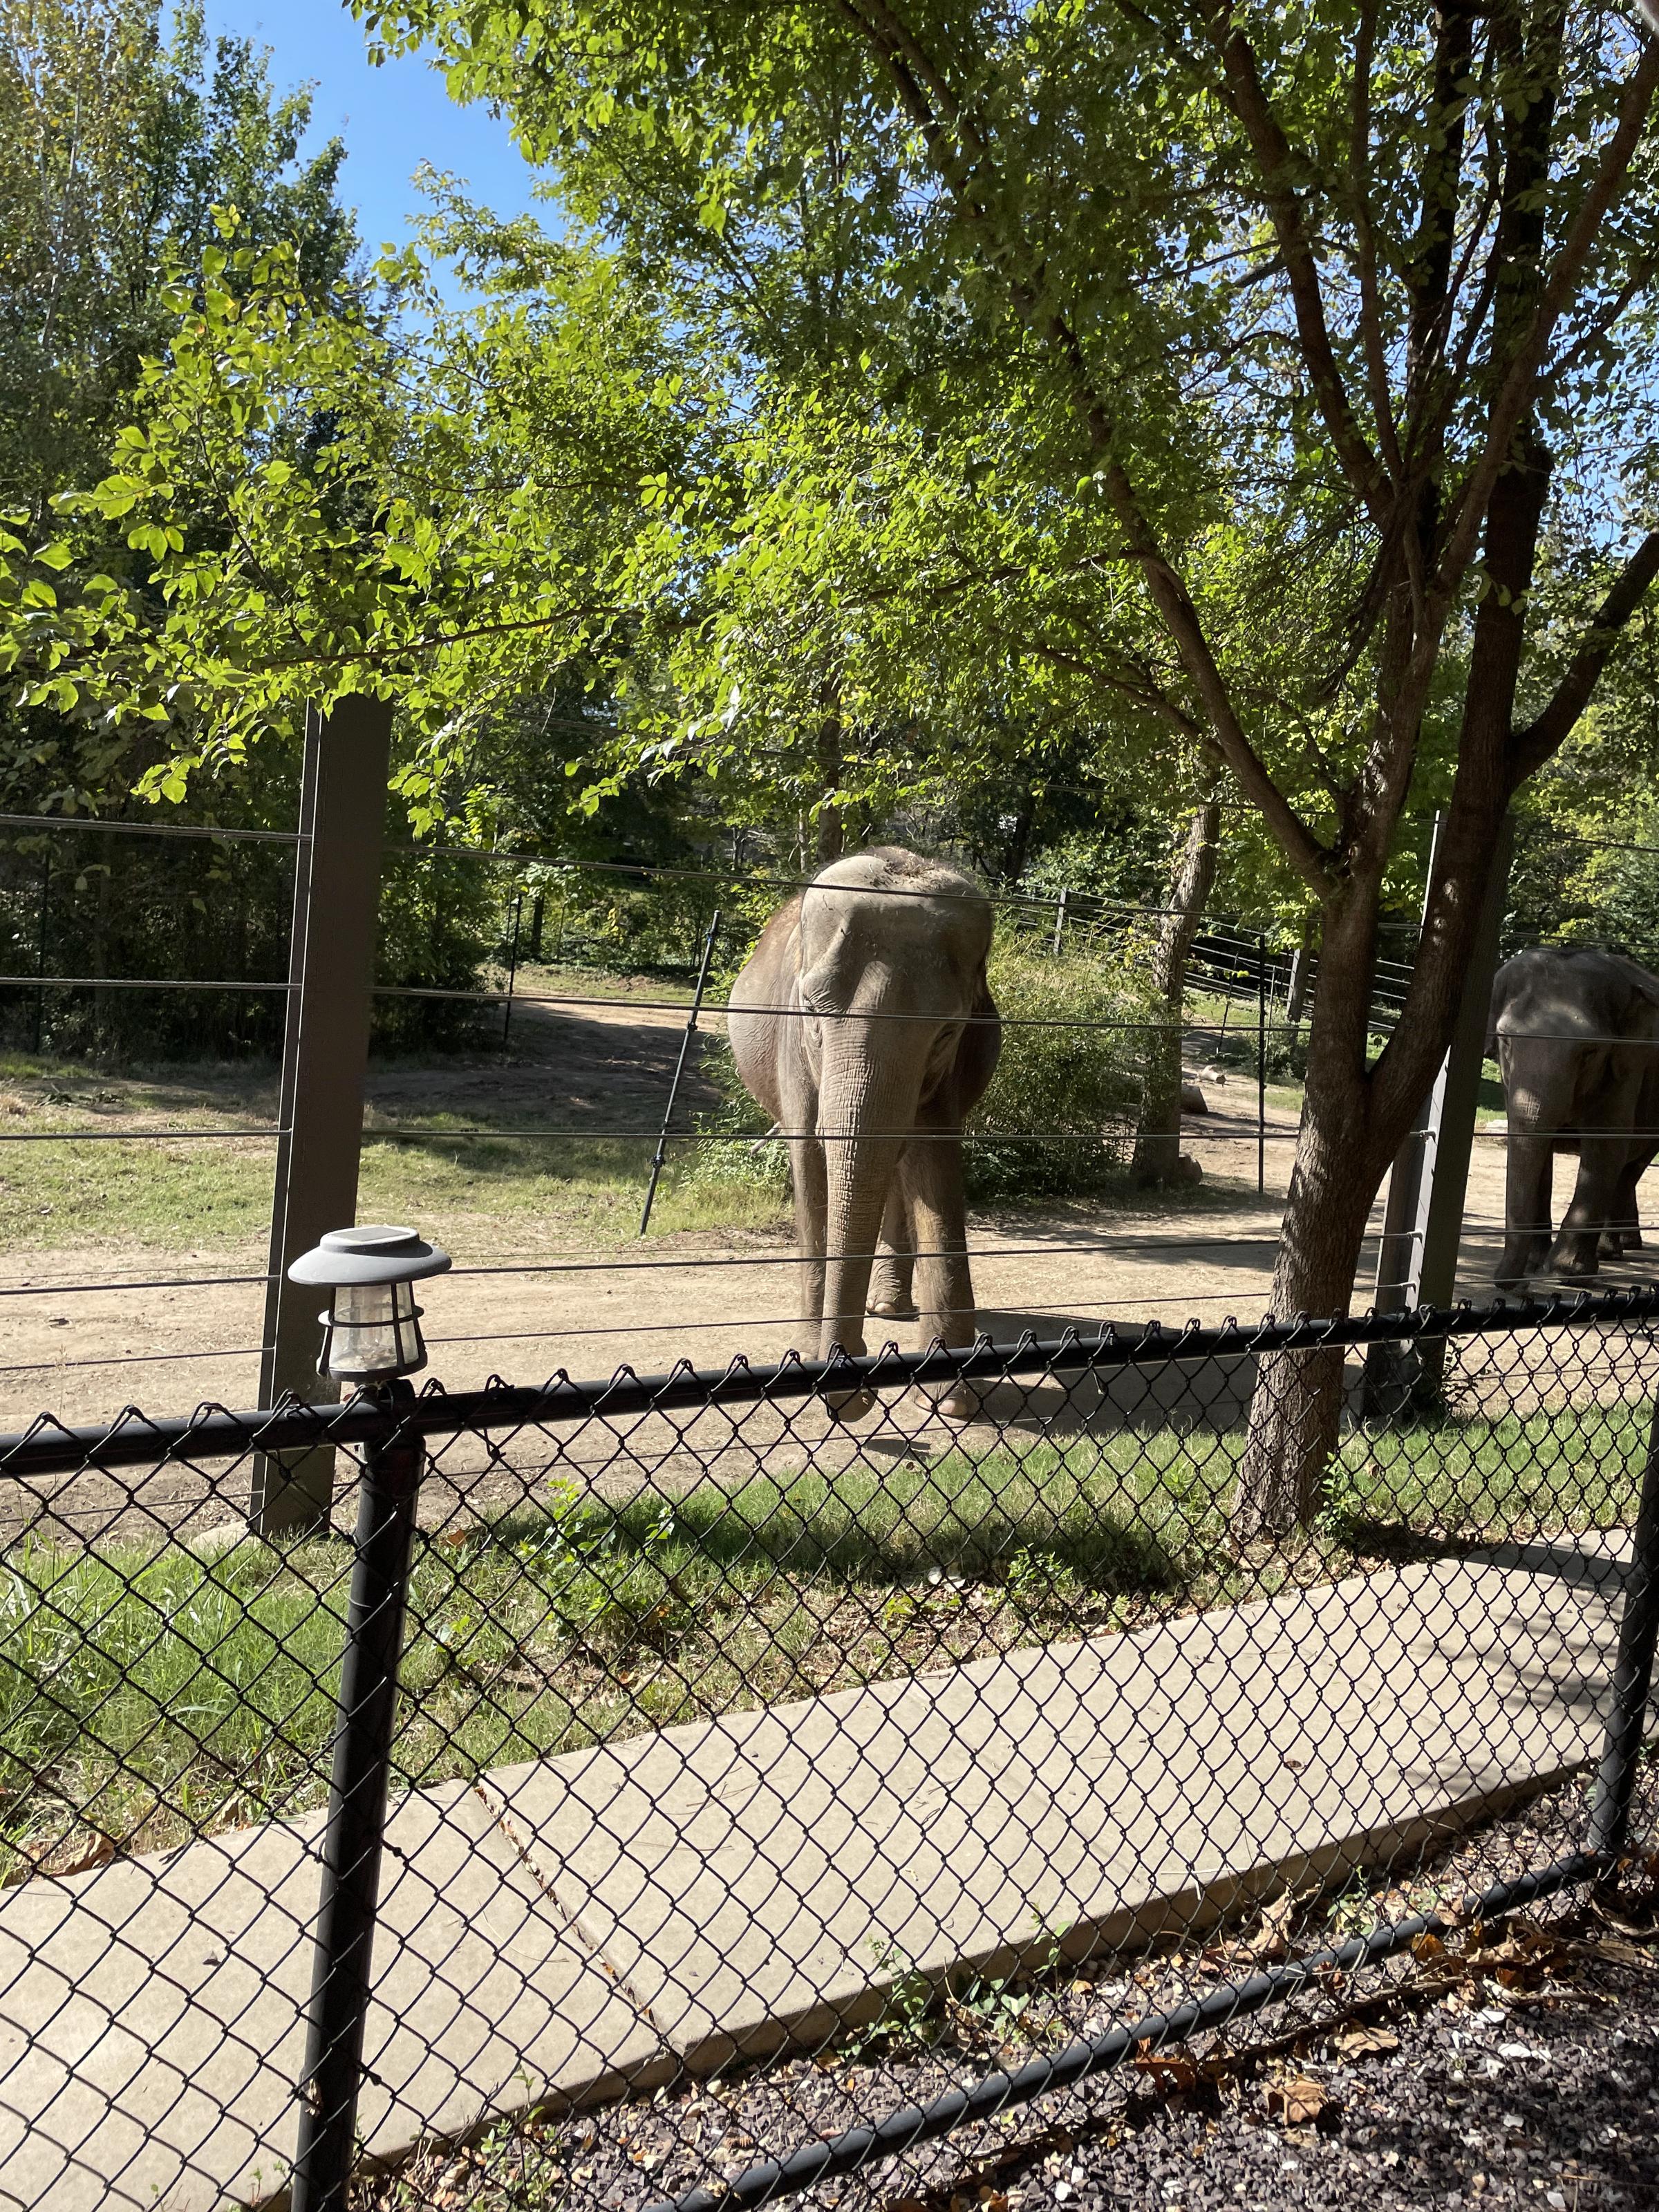 Saint Louis Zoo elephants